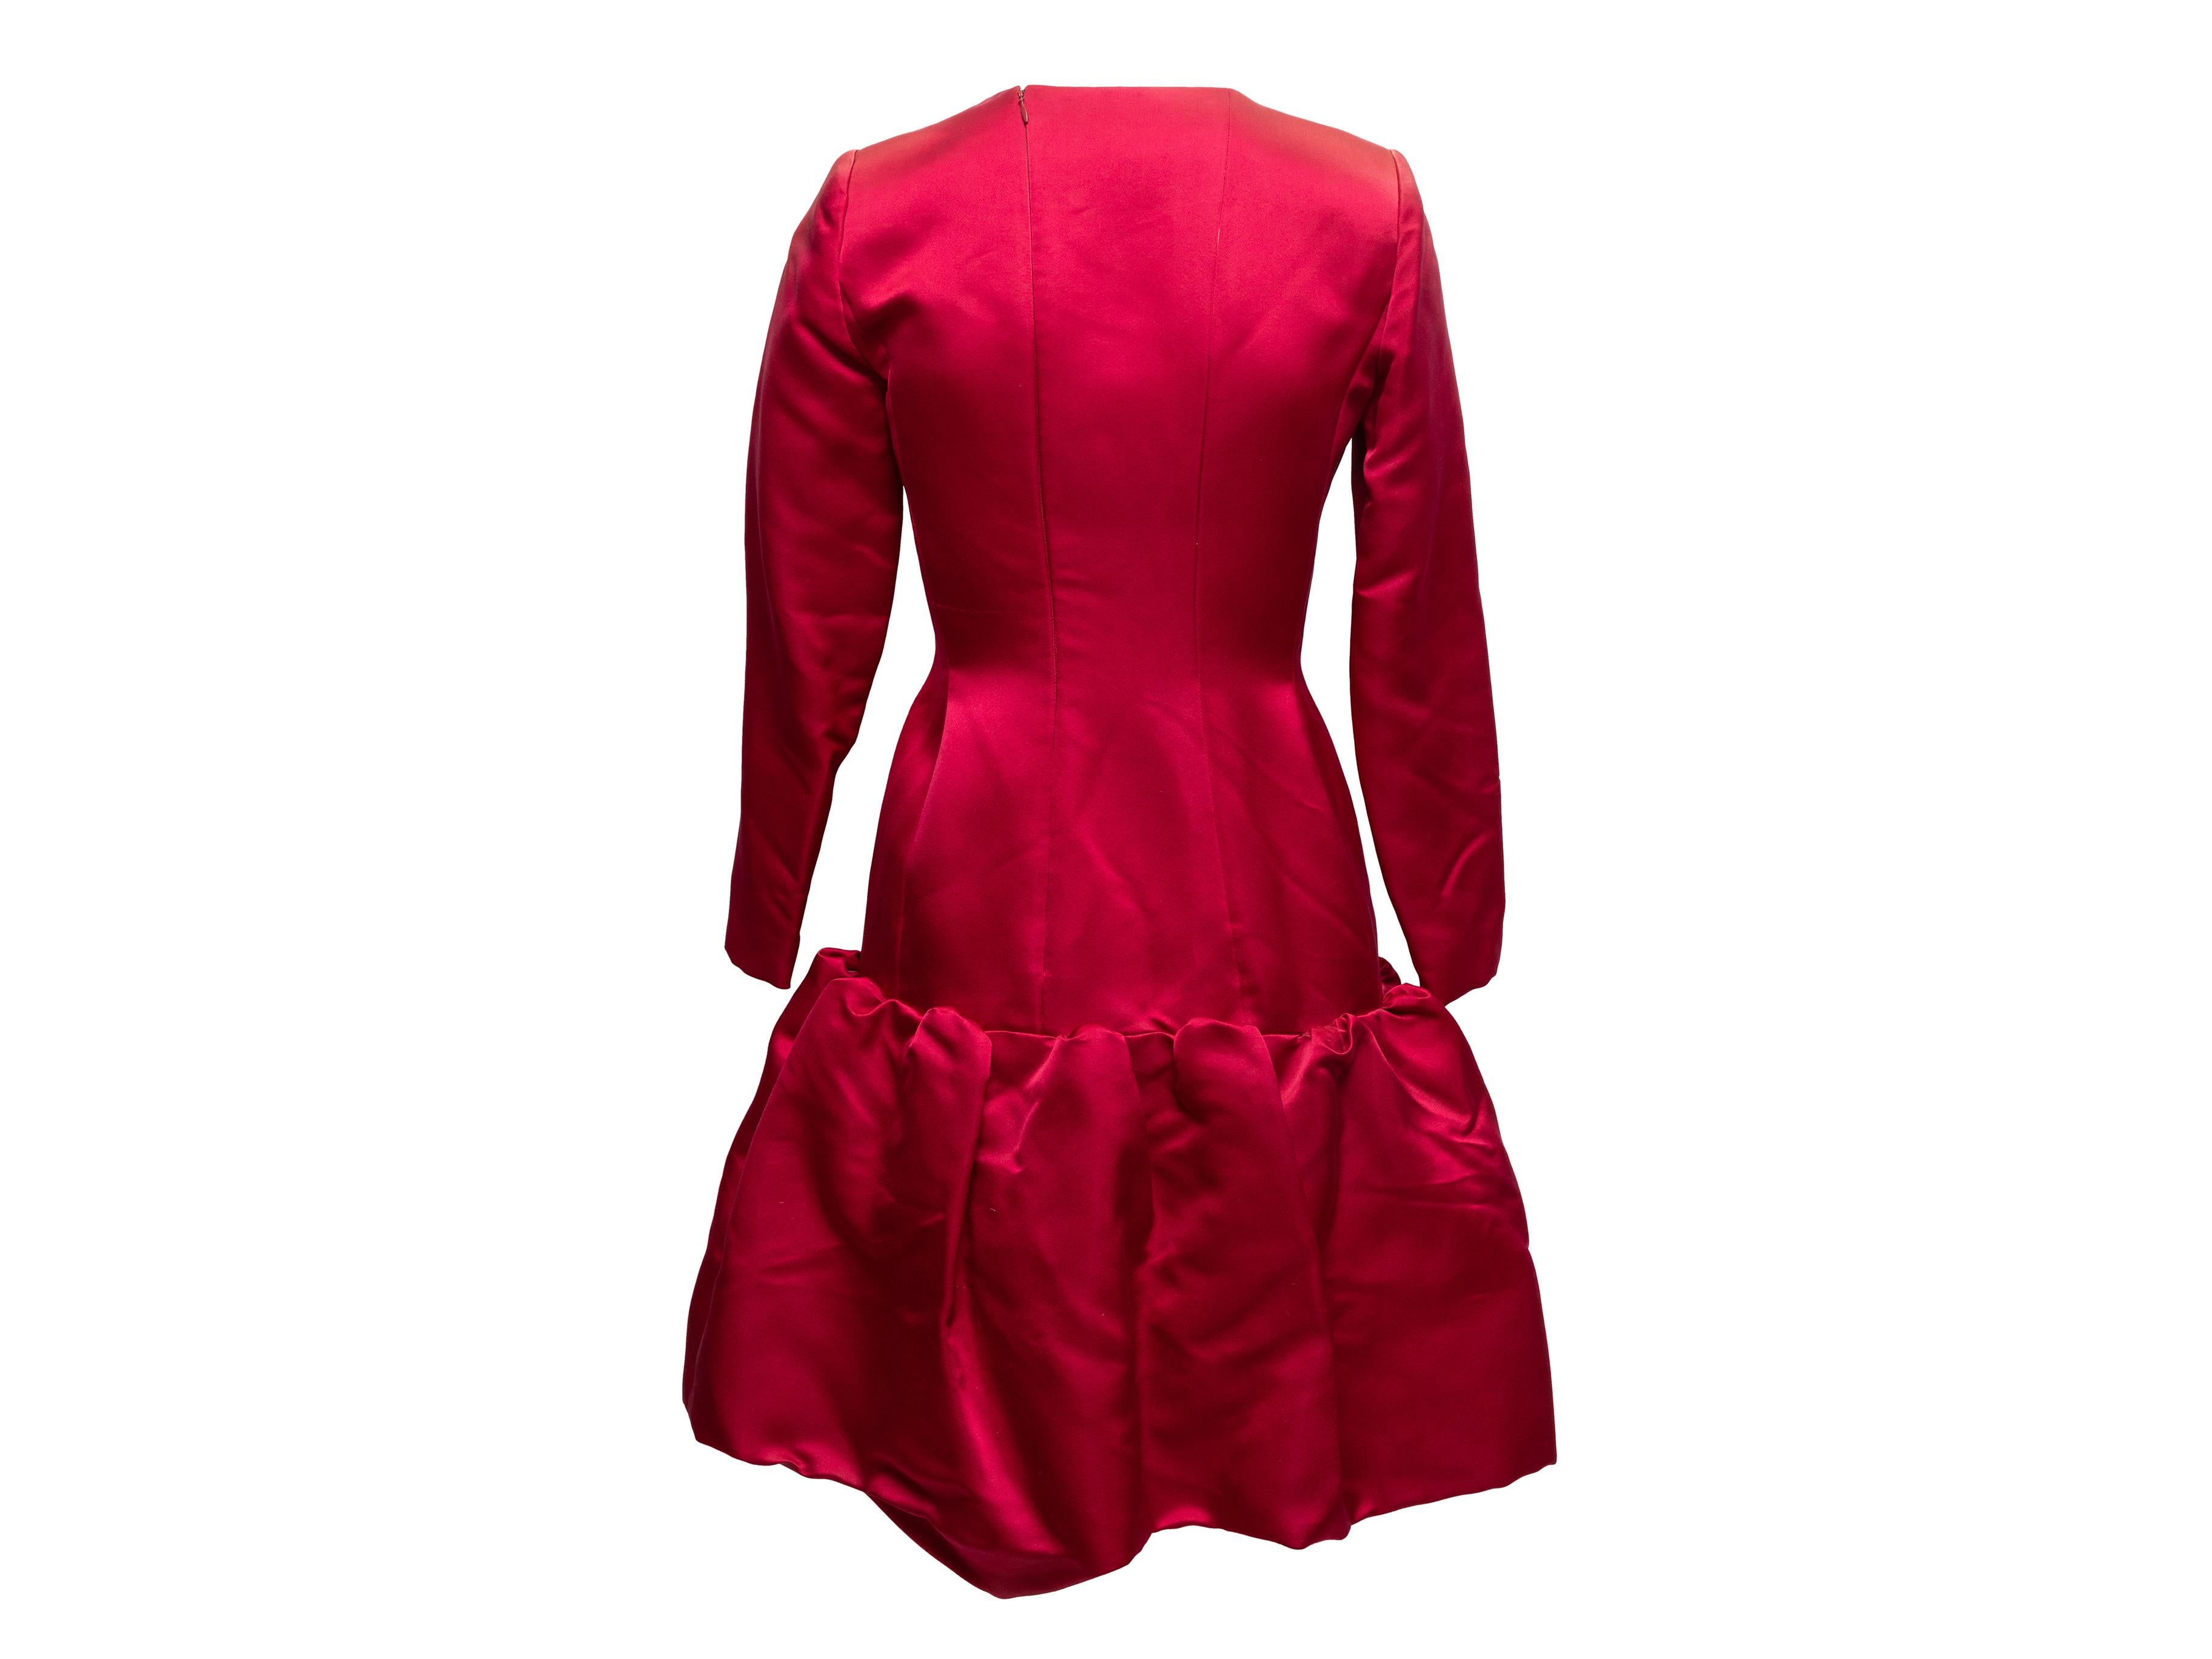 Oscar de la Renta Red Long Sleeve Drop Waist Dress In Good Condition For Sale In New York, NY